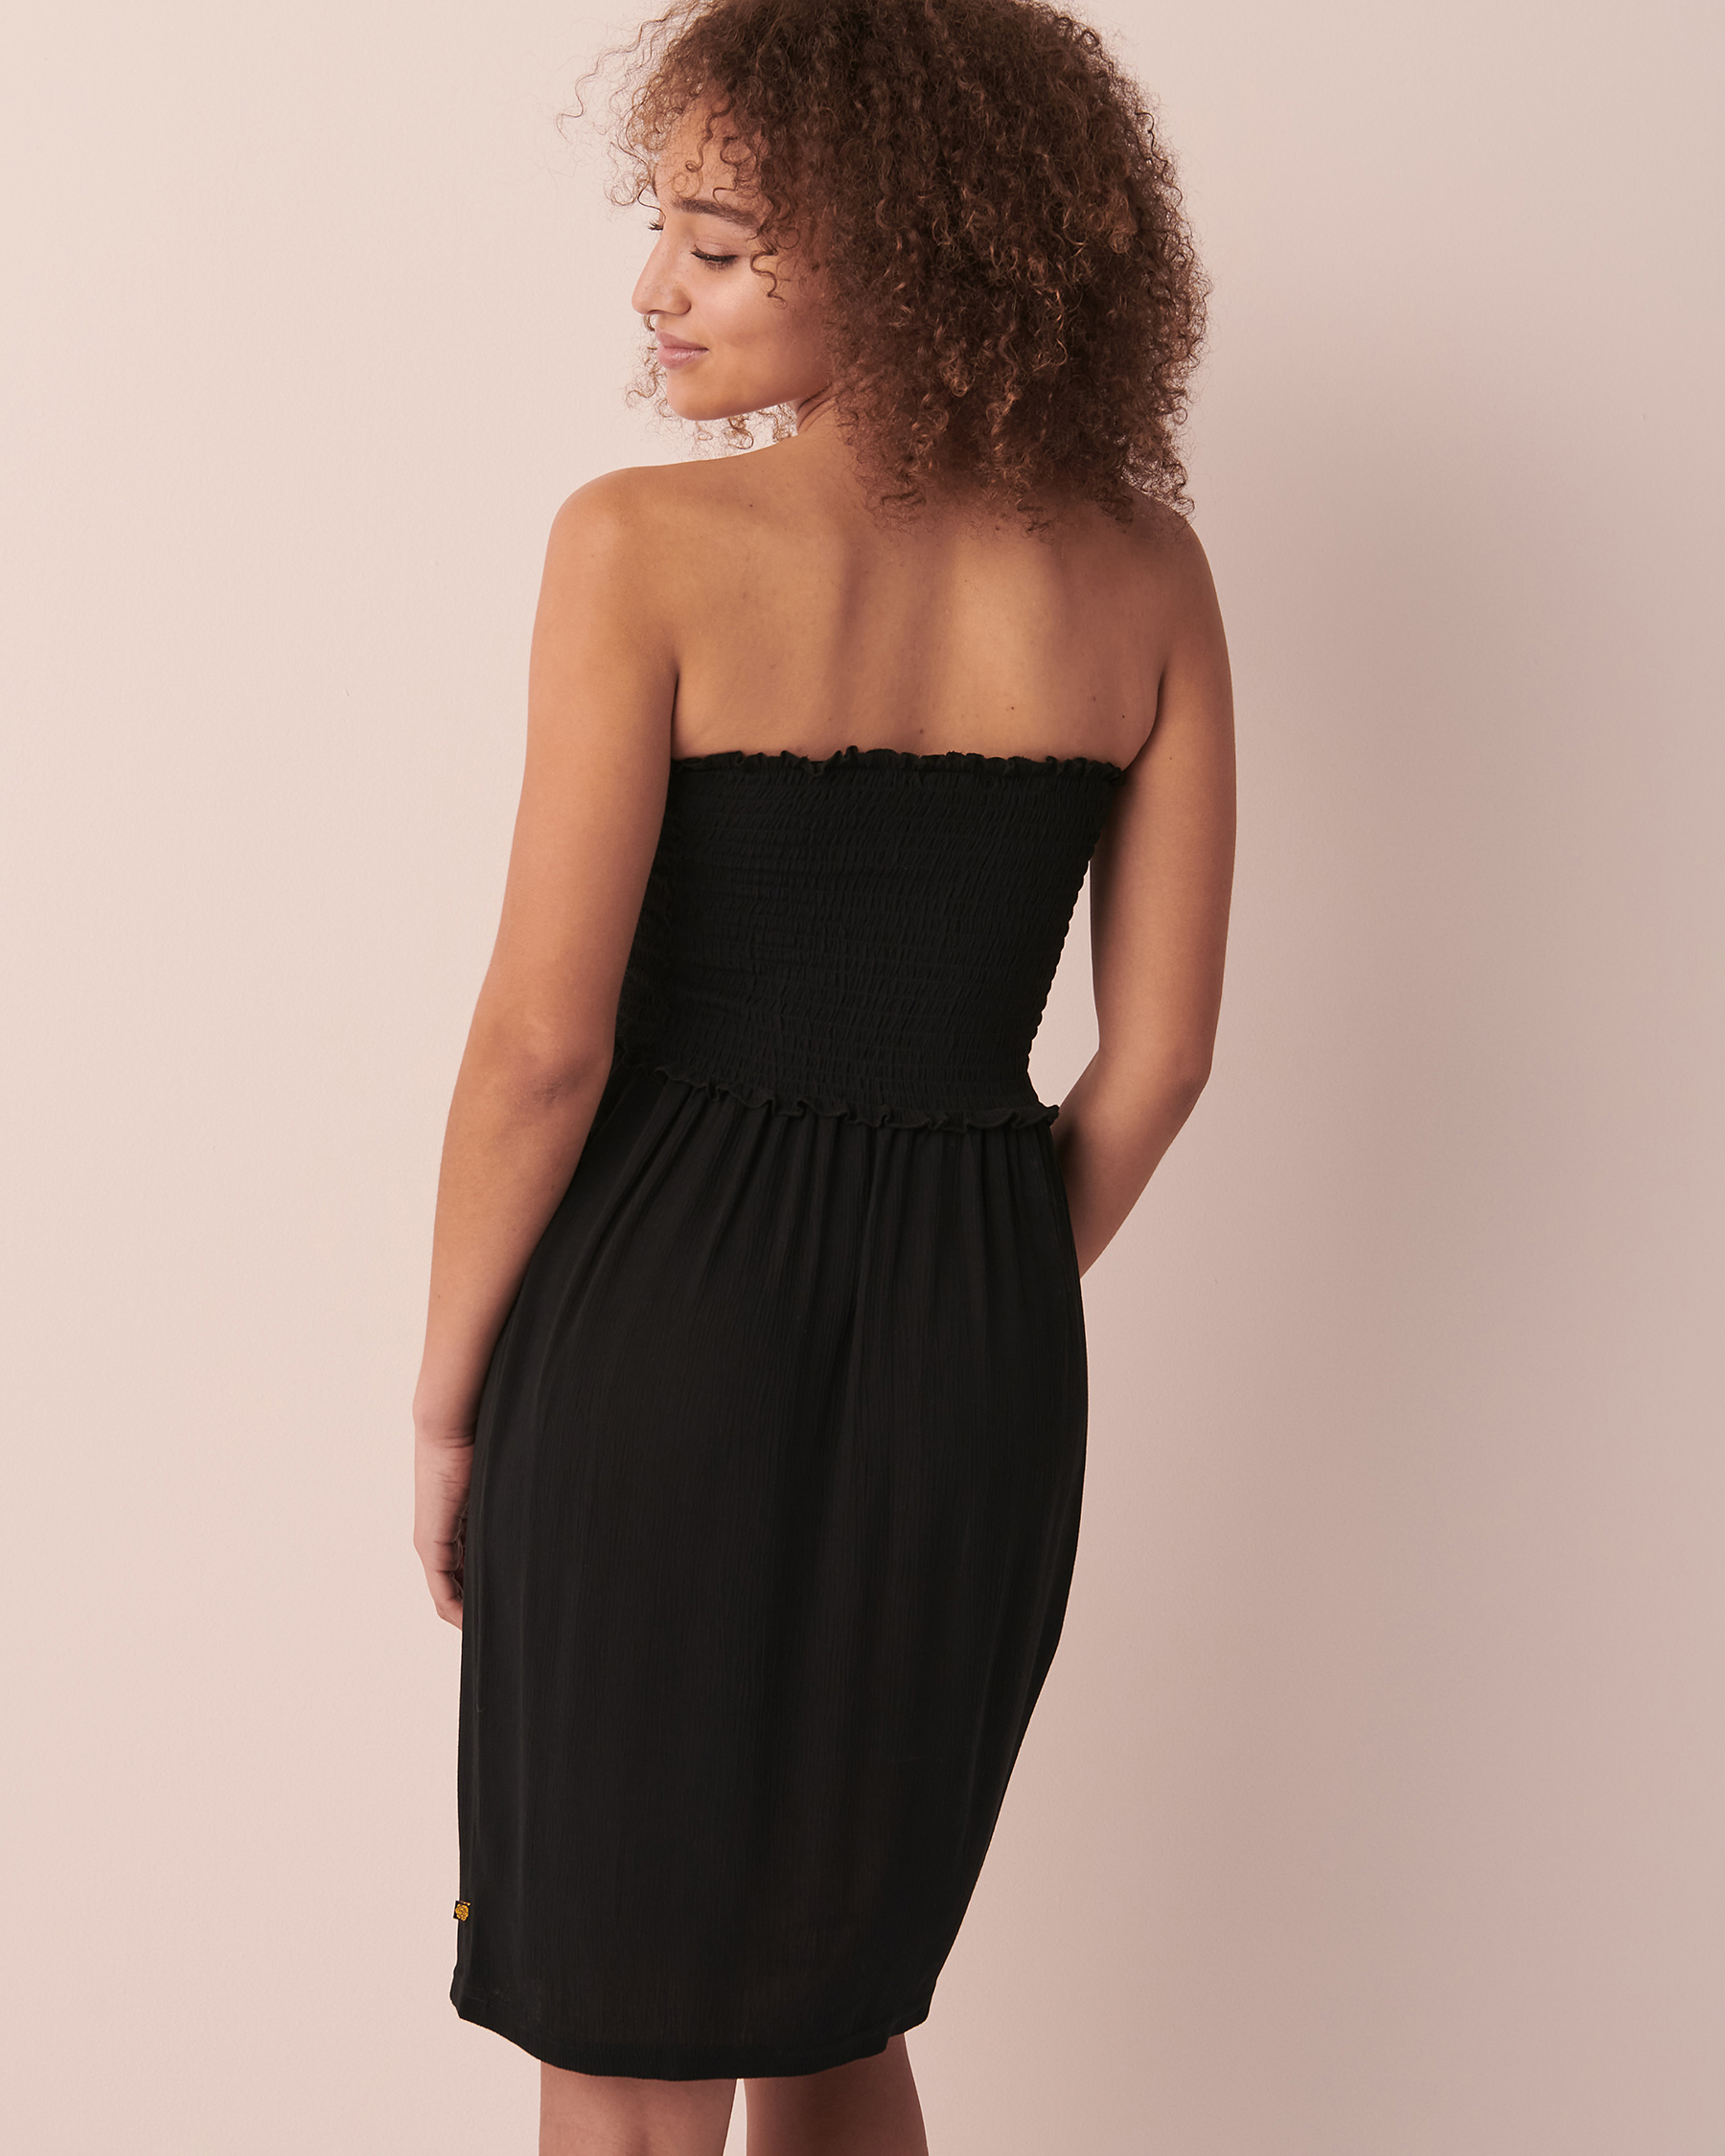 Strapless Mini Dress - Black